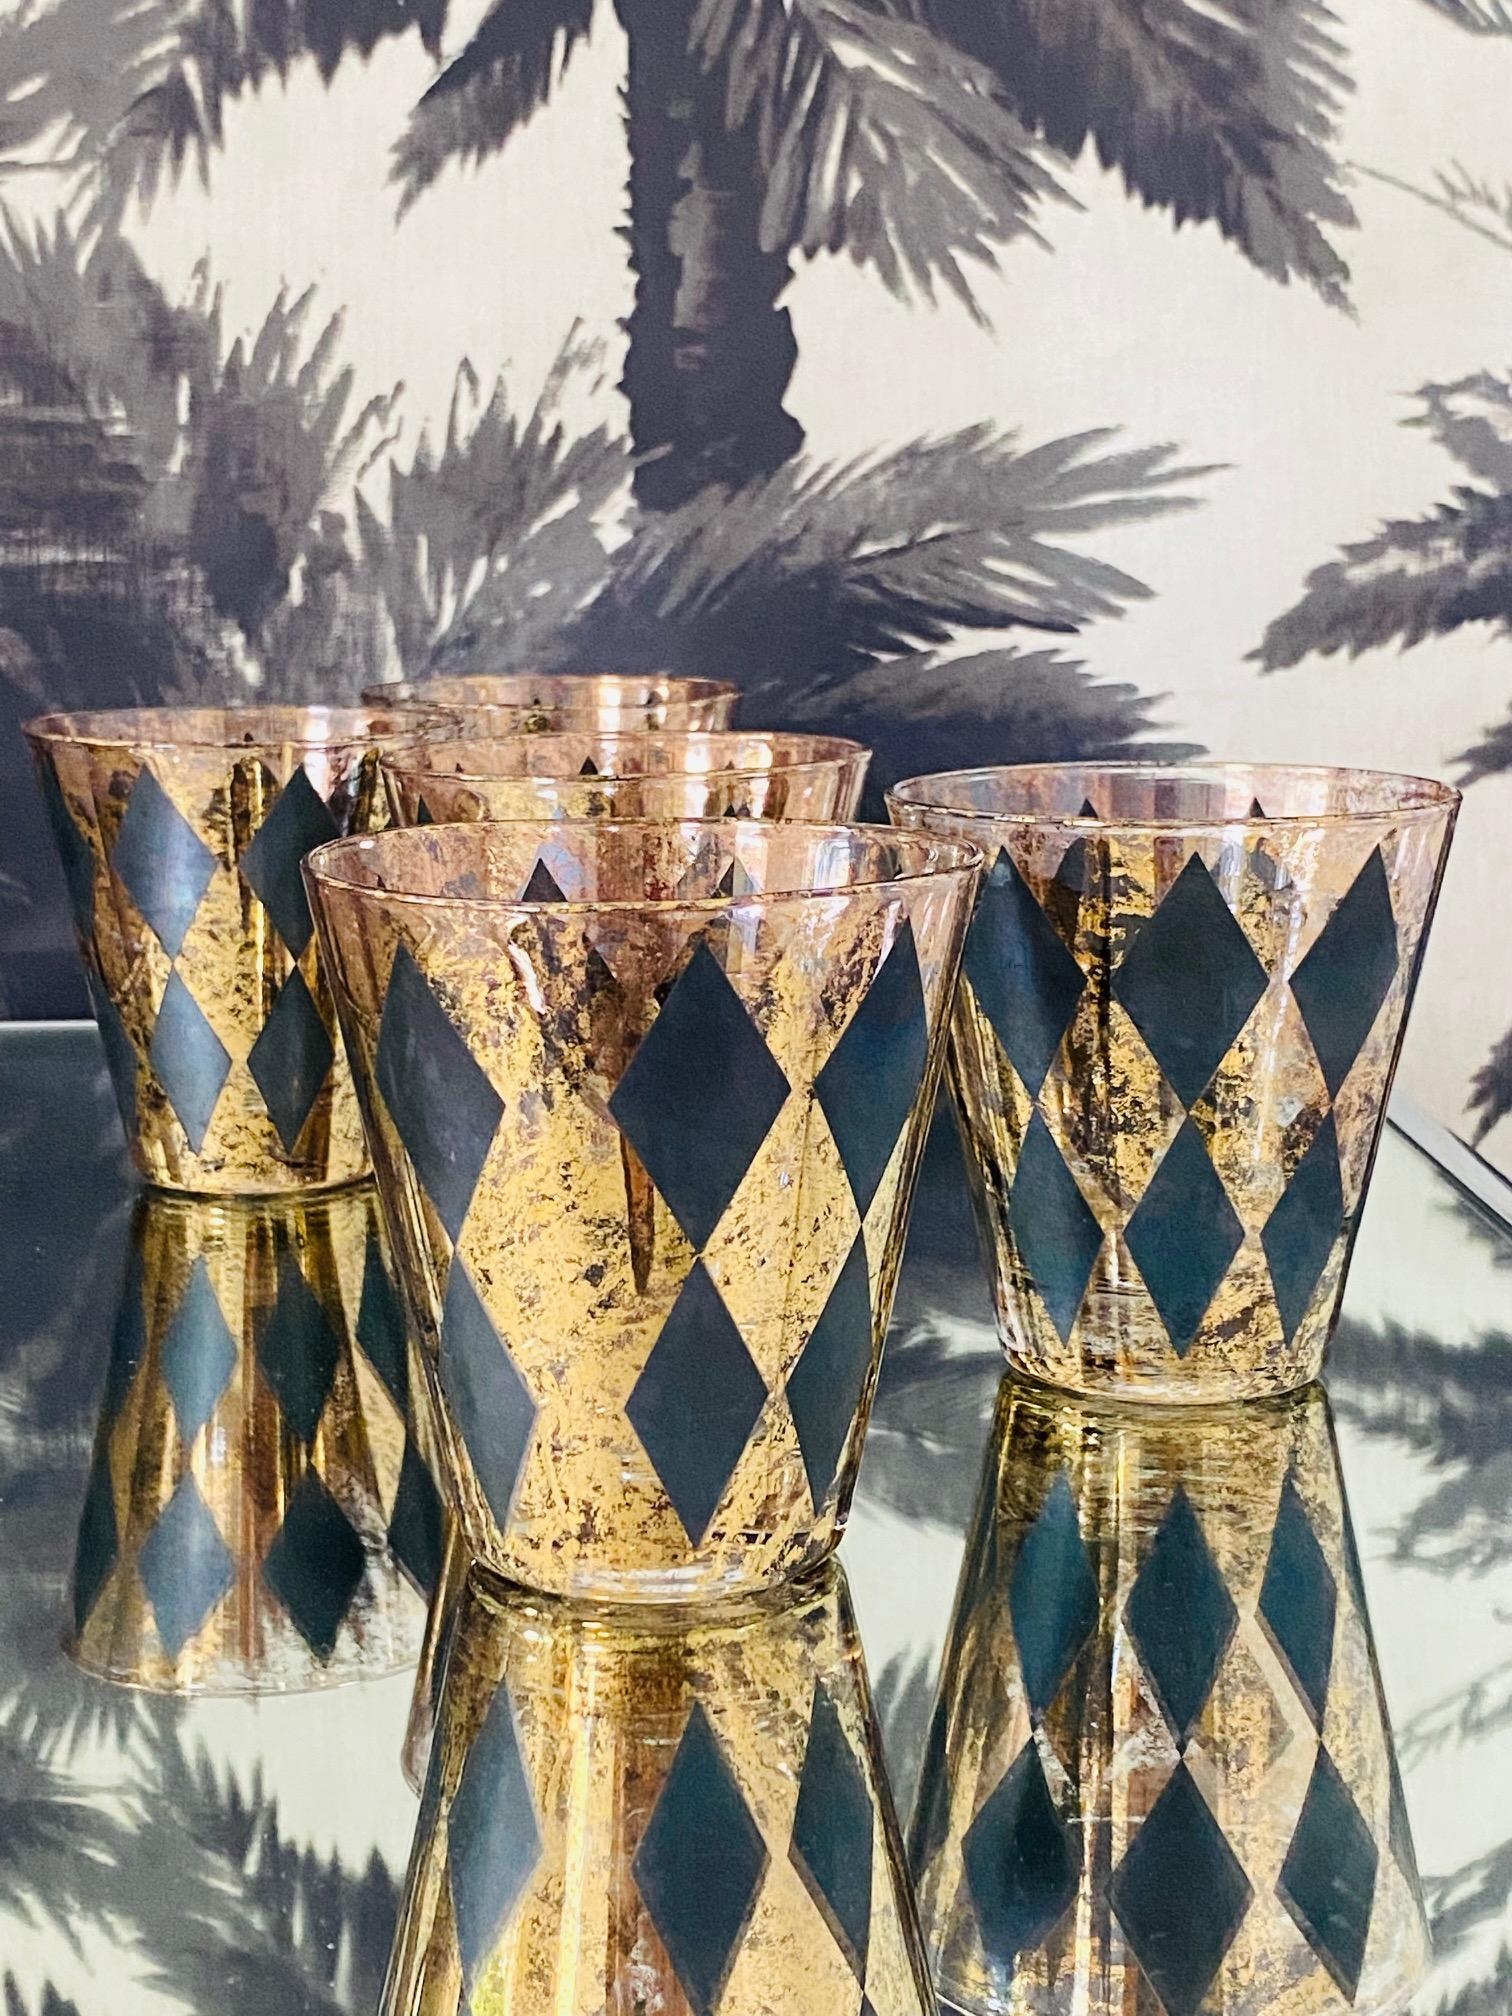 American Vintage Barware Glasses with Harlequin Design in Black with Gold Leaf, c. 1960's